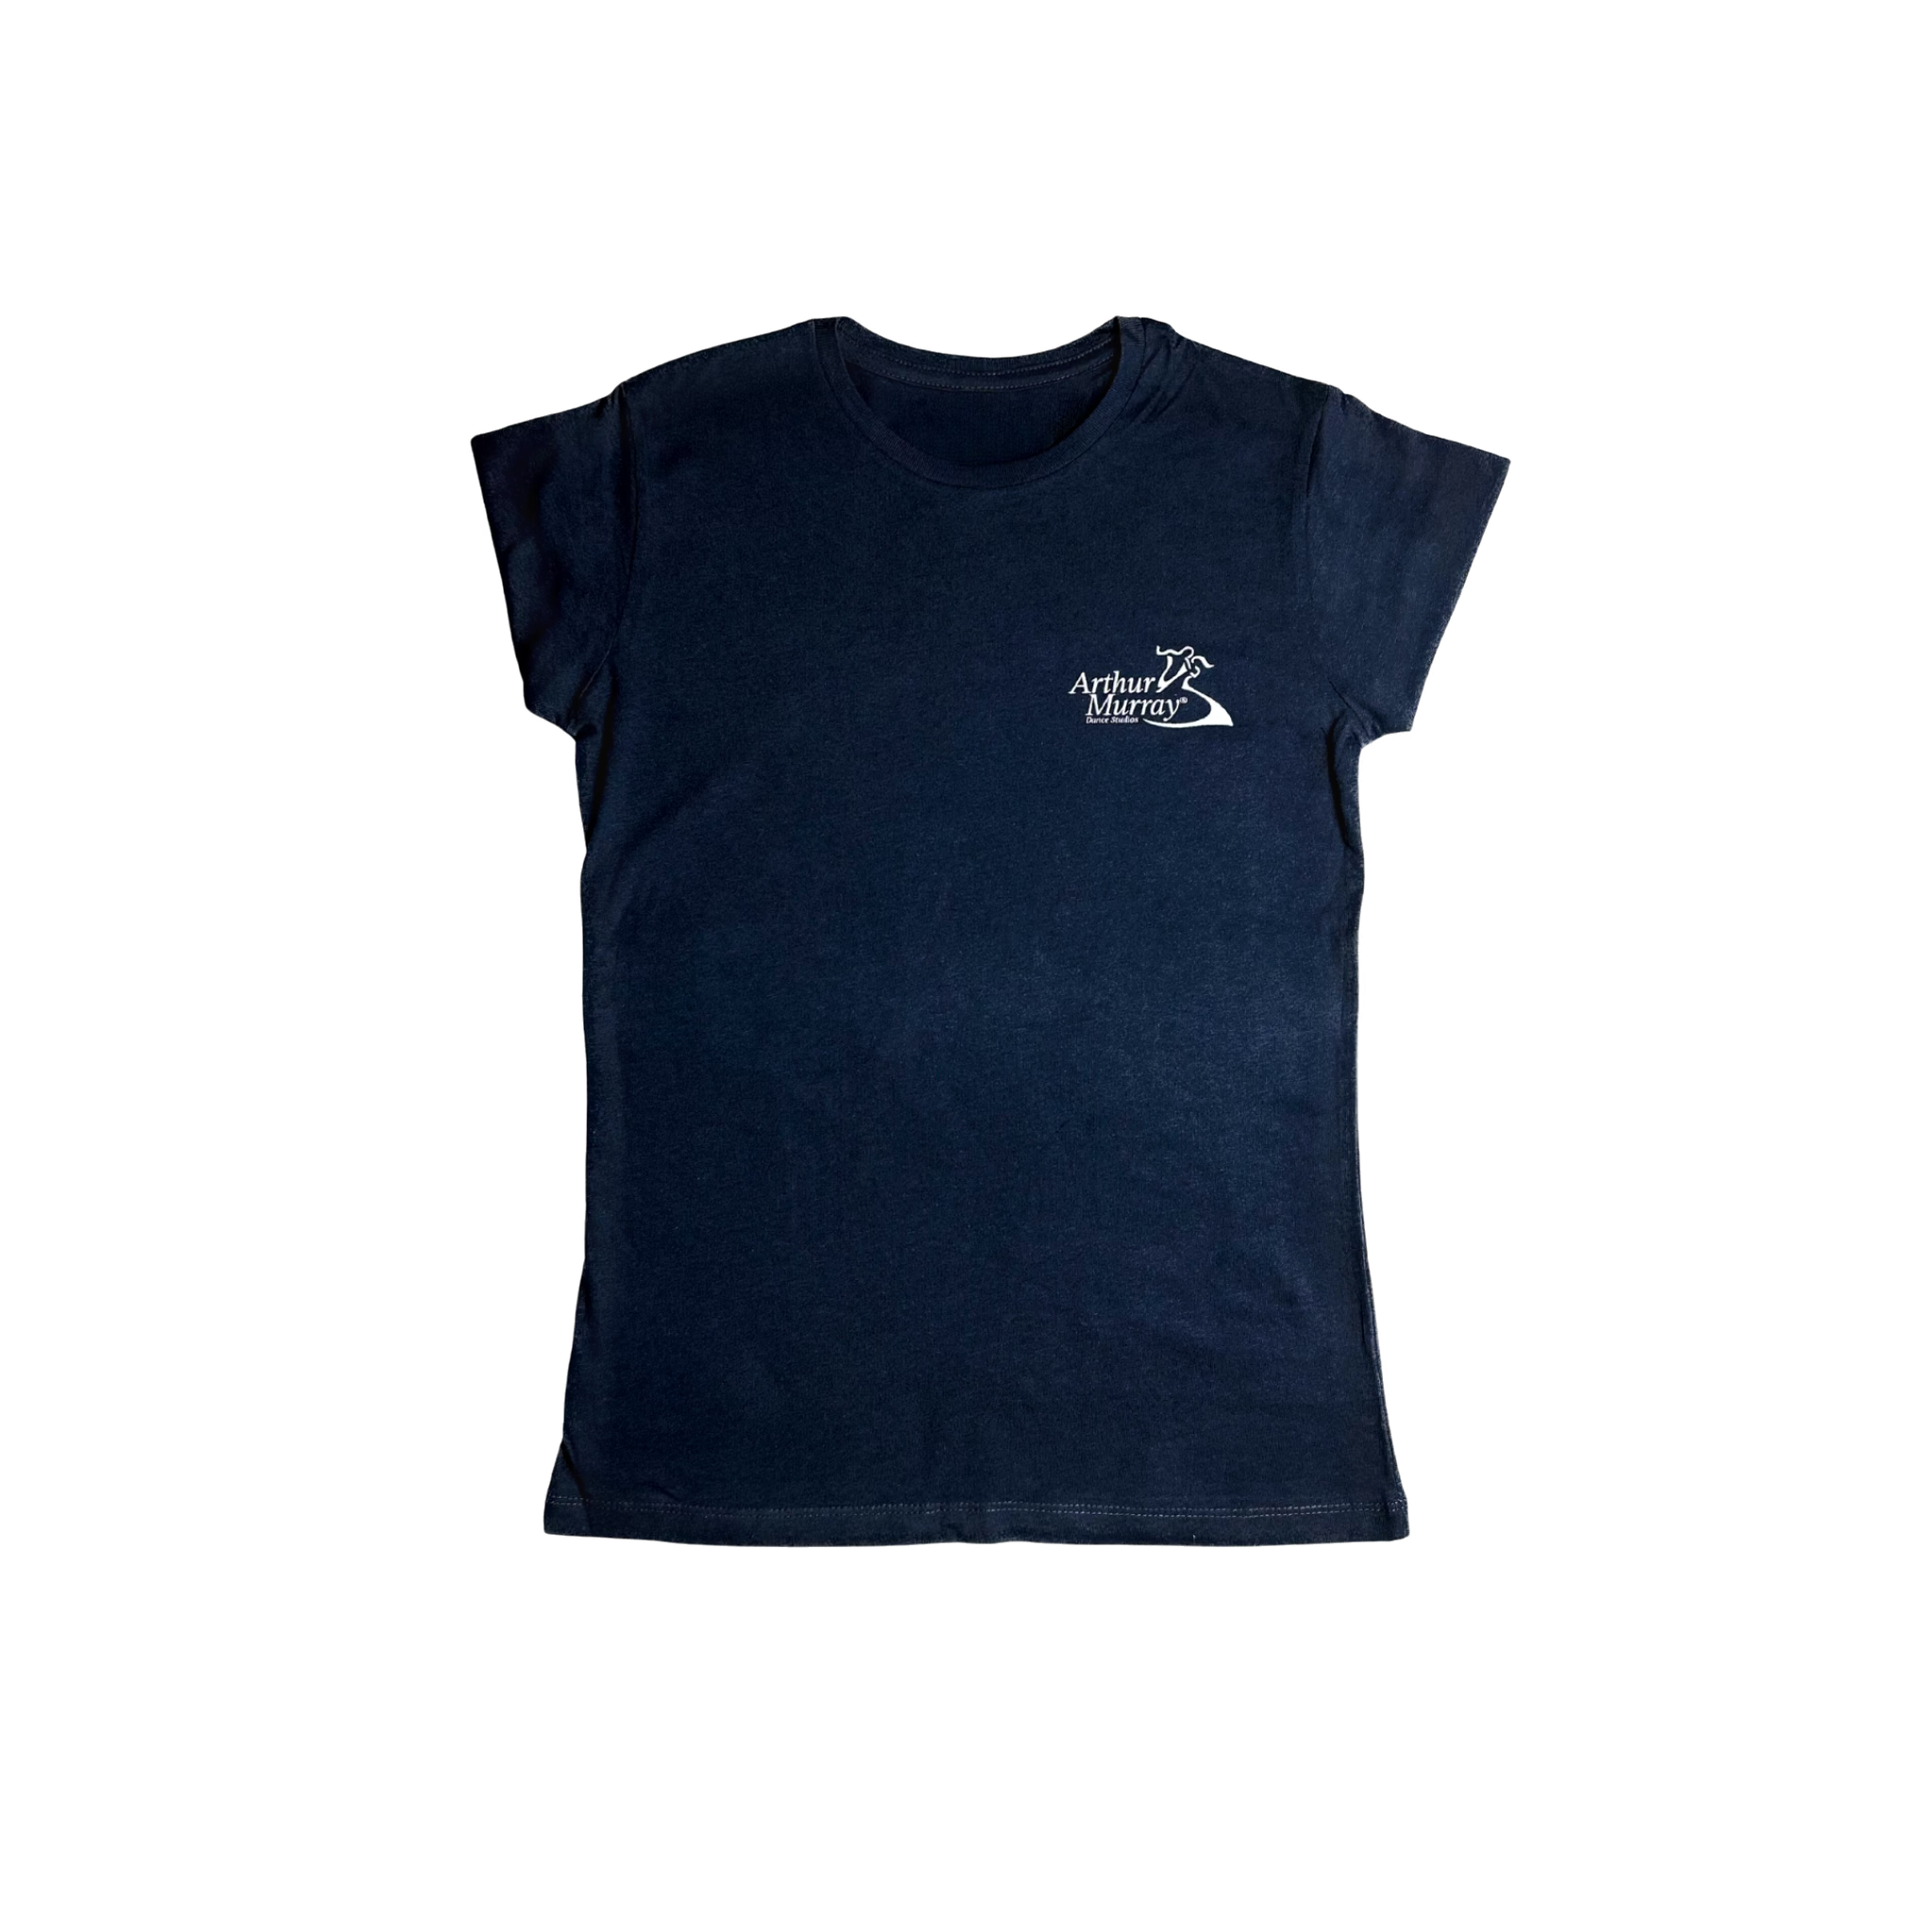 MURRAY T-shirt (Navy Blue / Arthur Murray Logo® White)